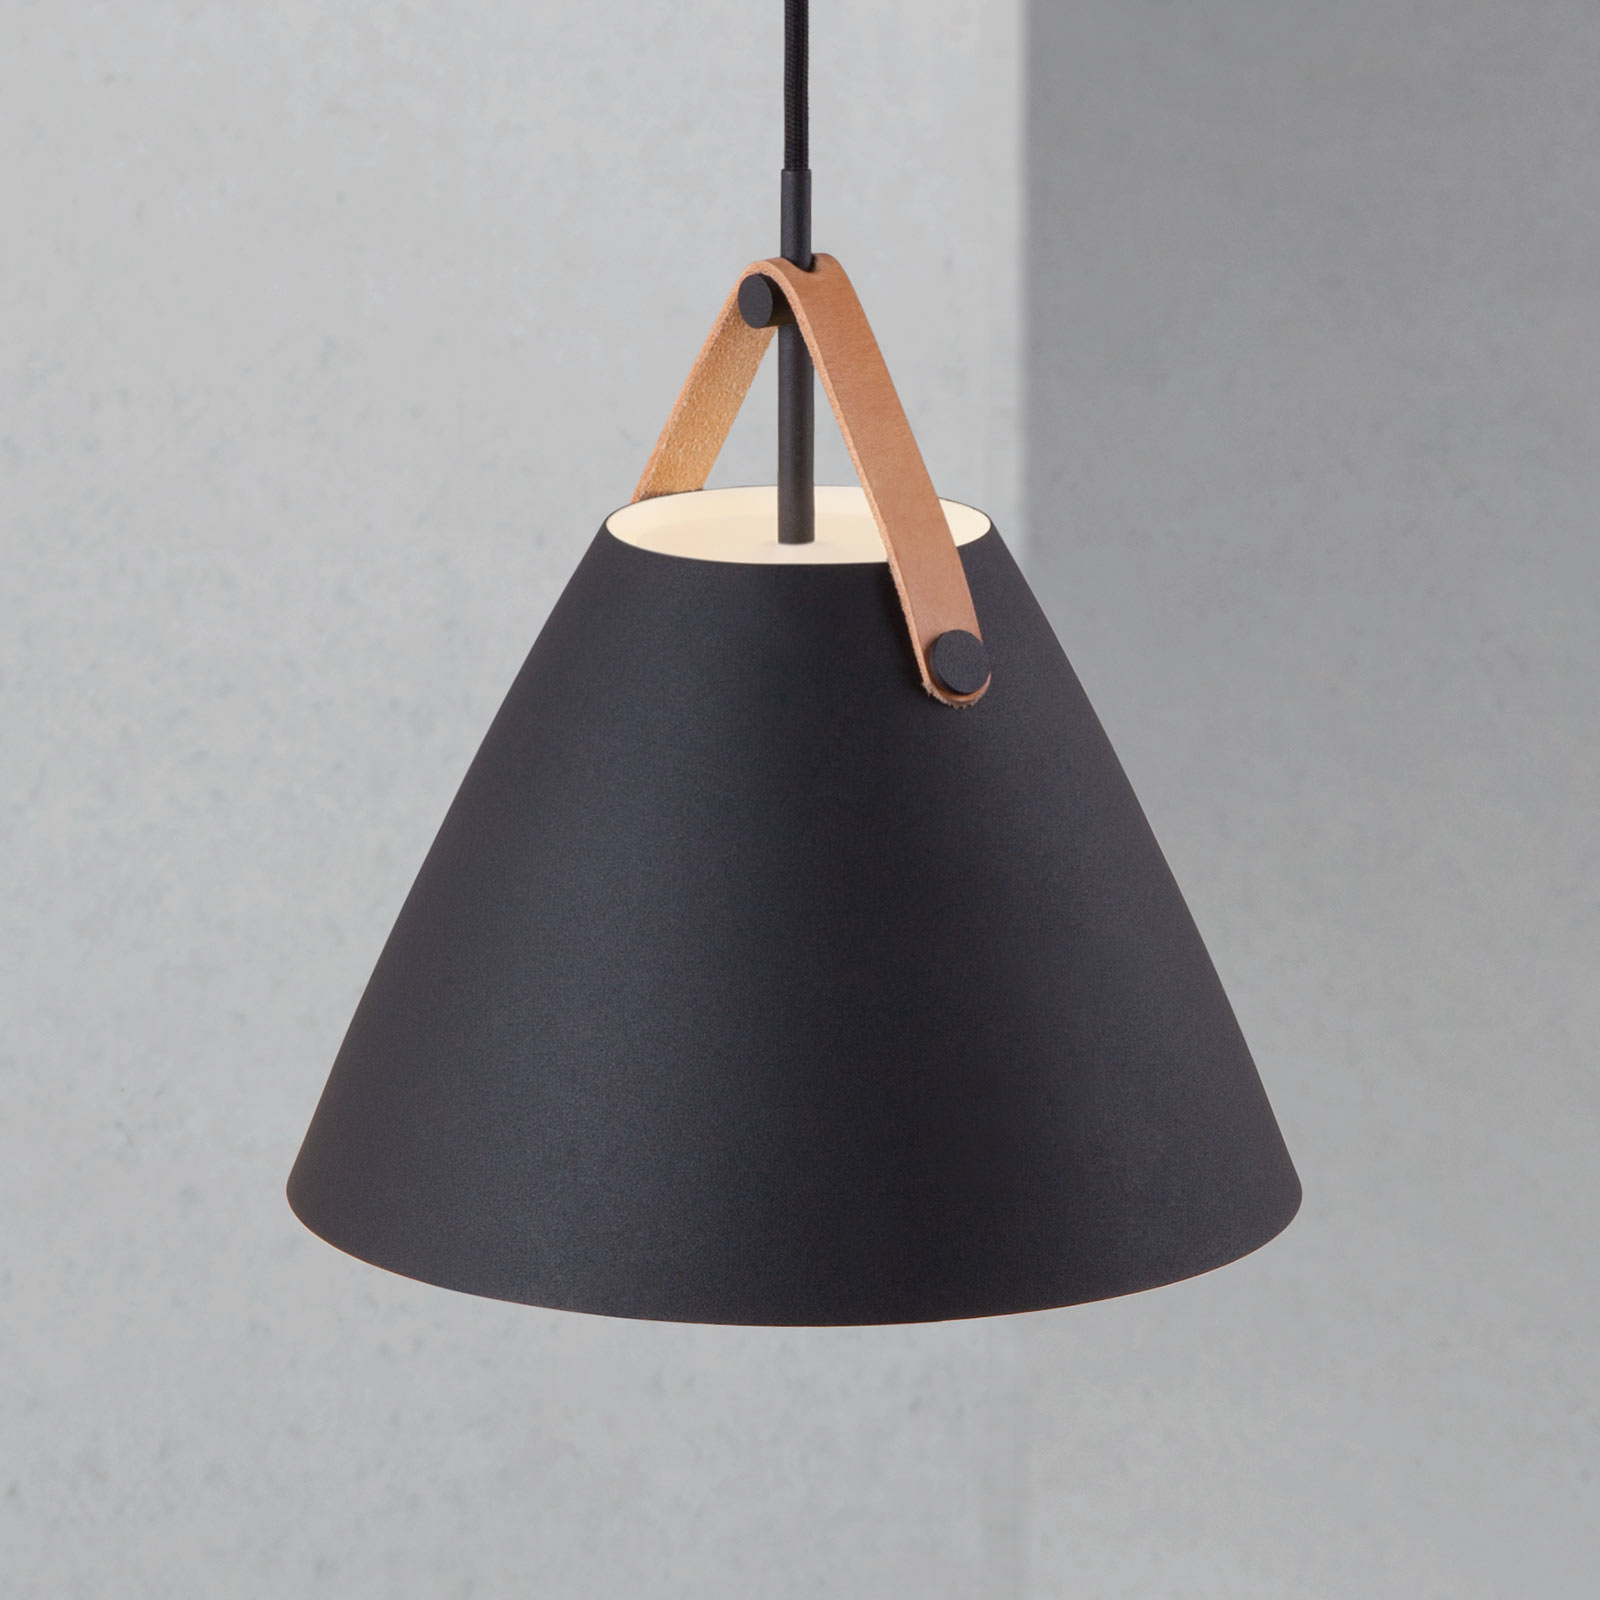 Strap függő lámpa, fekete, Ø 27 cm